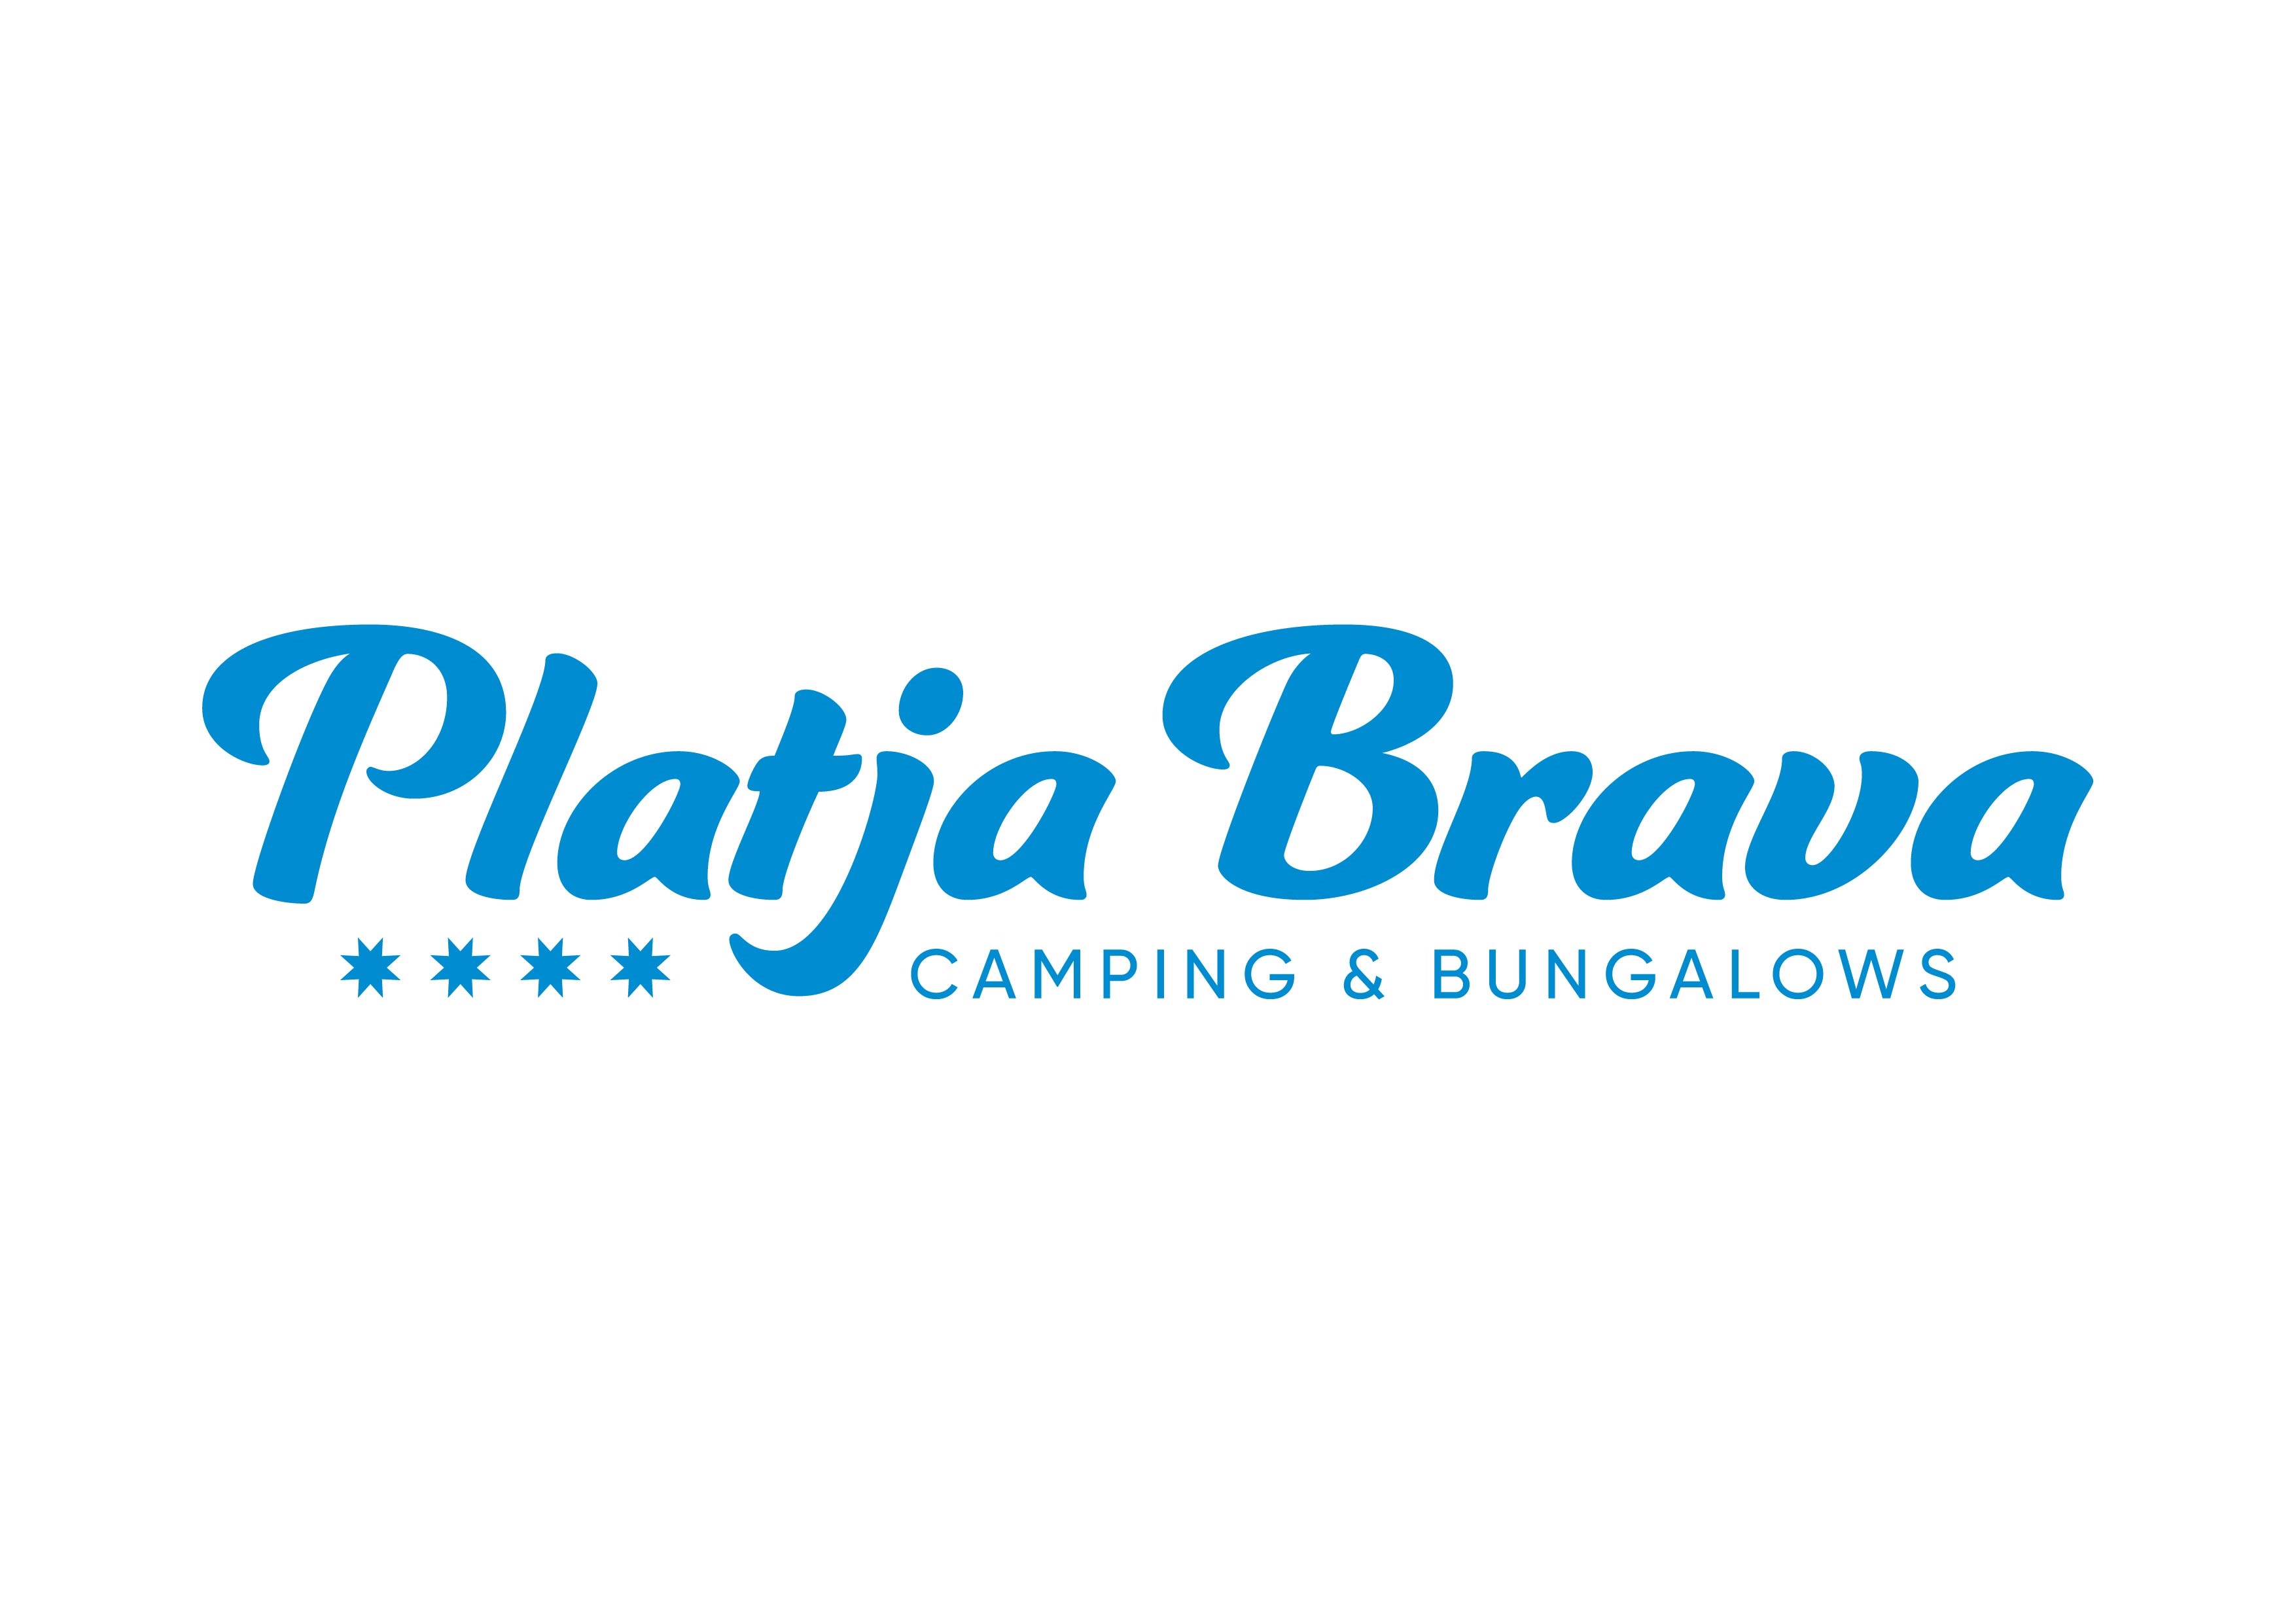 Owner Camping & Bungalows Playa Brava - Pals